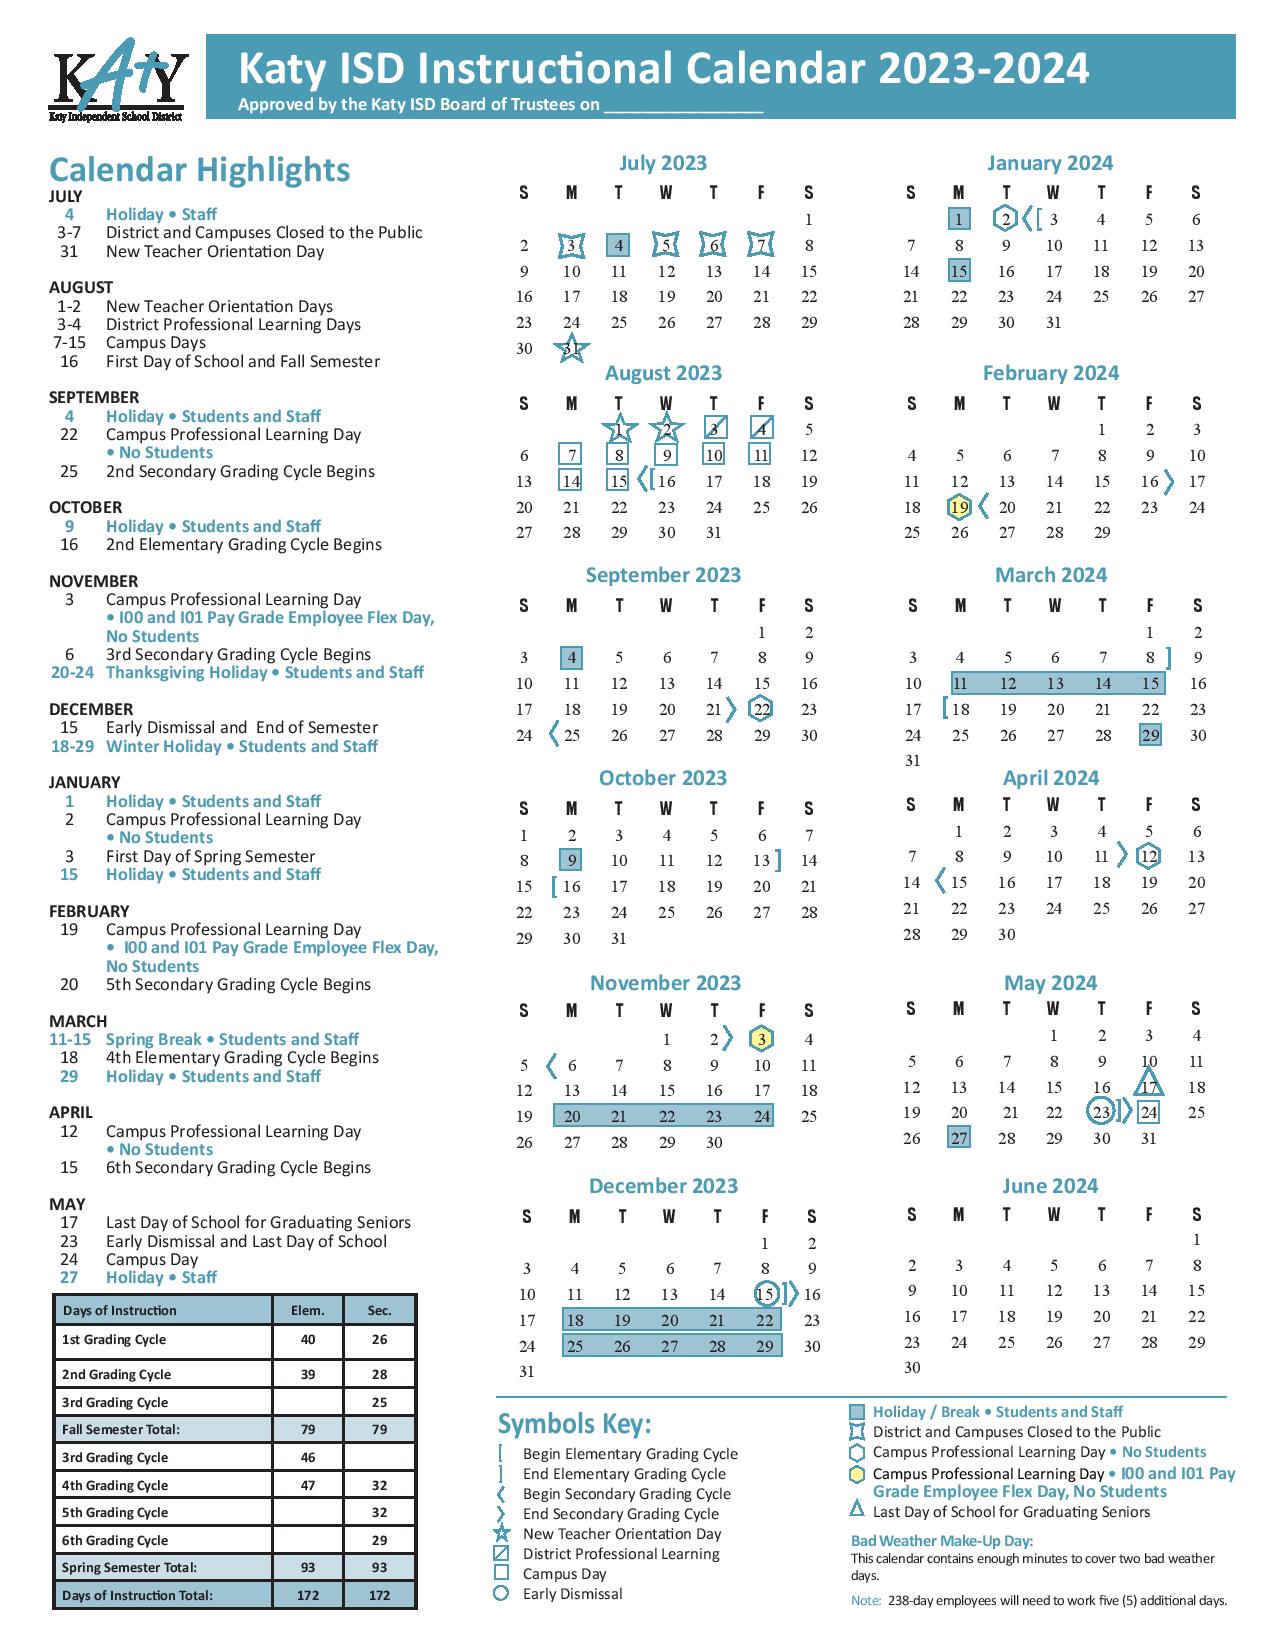 Katy ISD Approves 2024 2025 Instructional Calendar